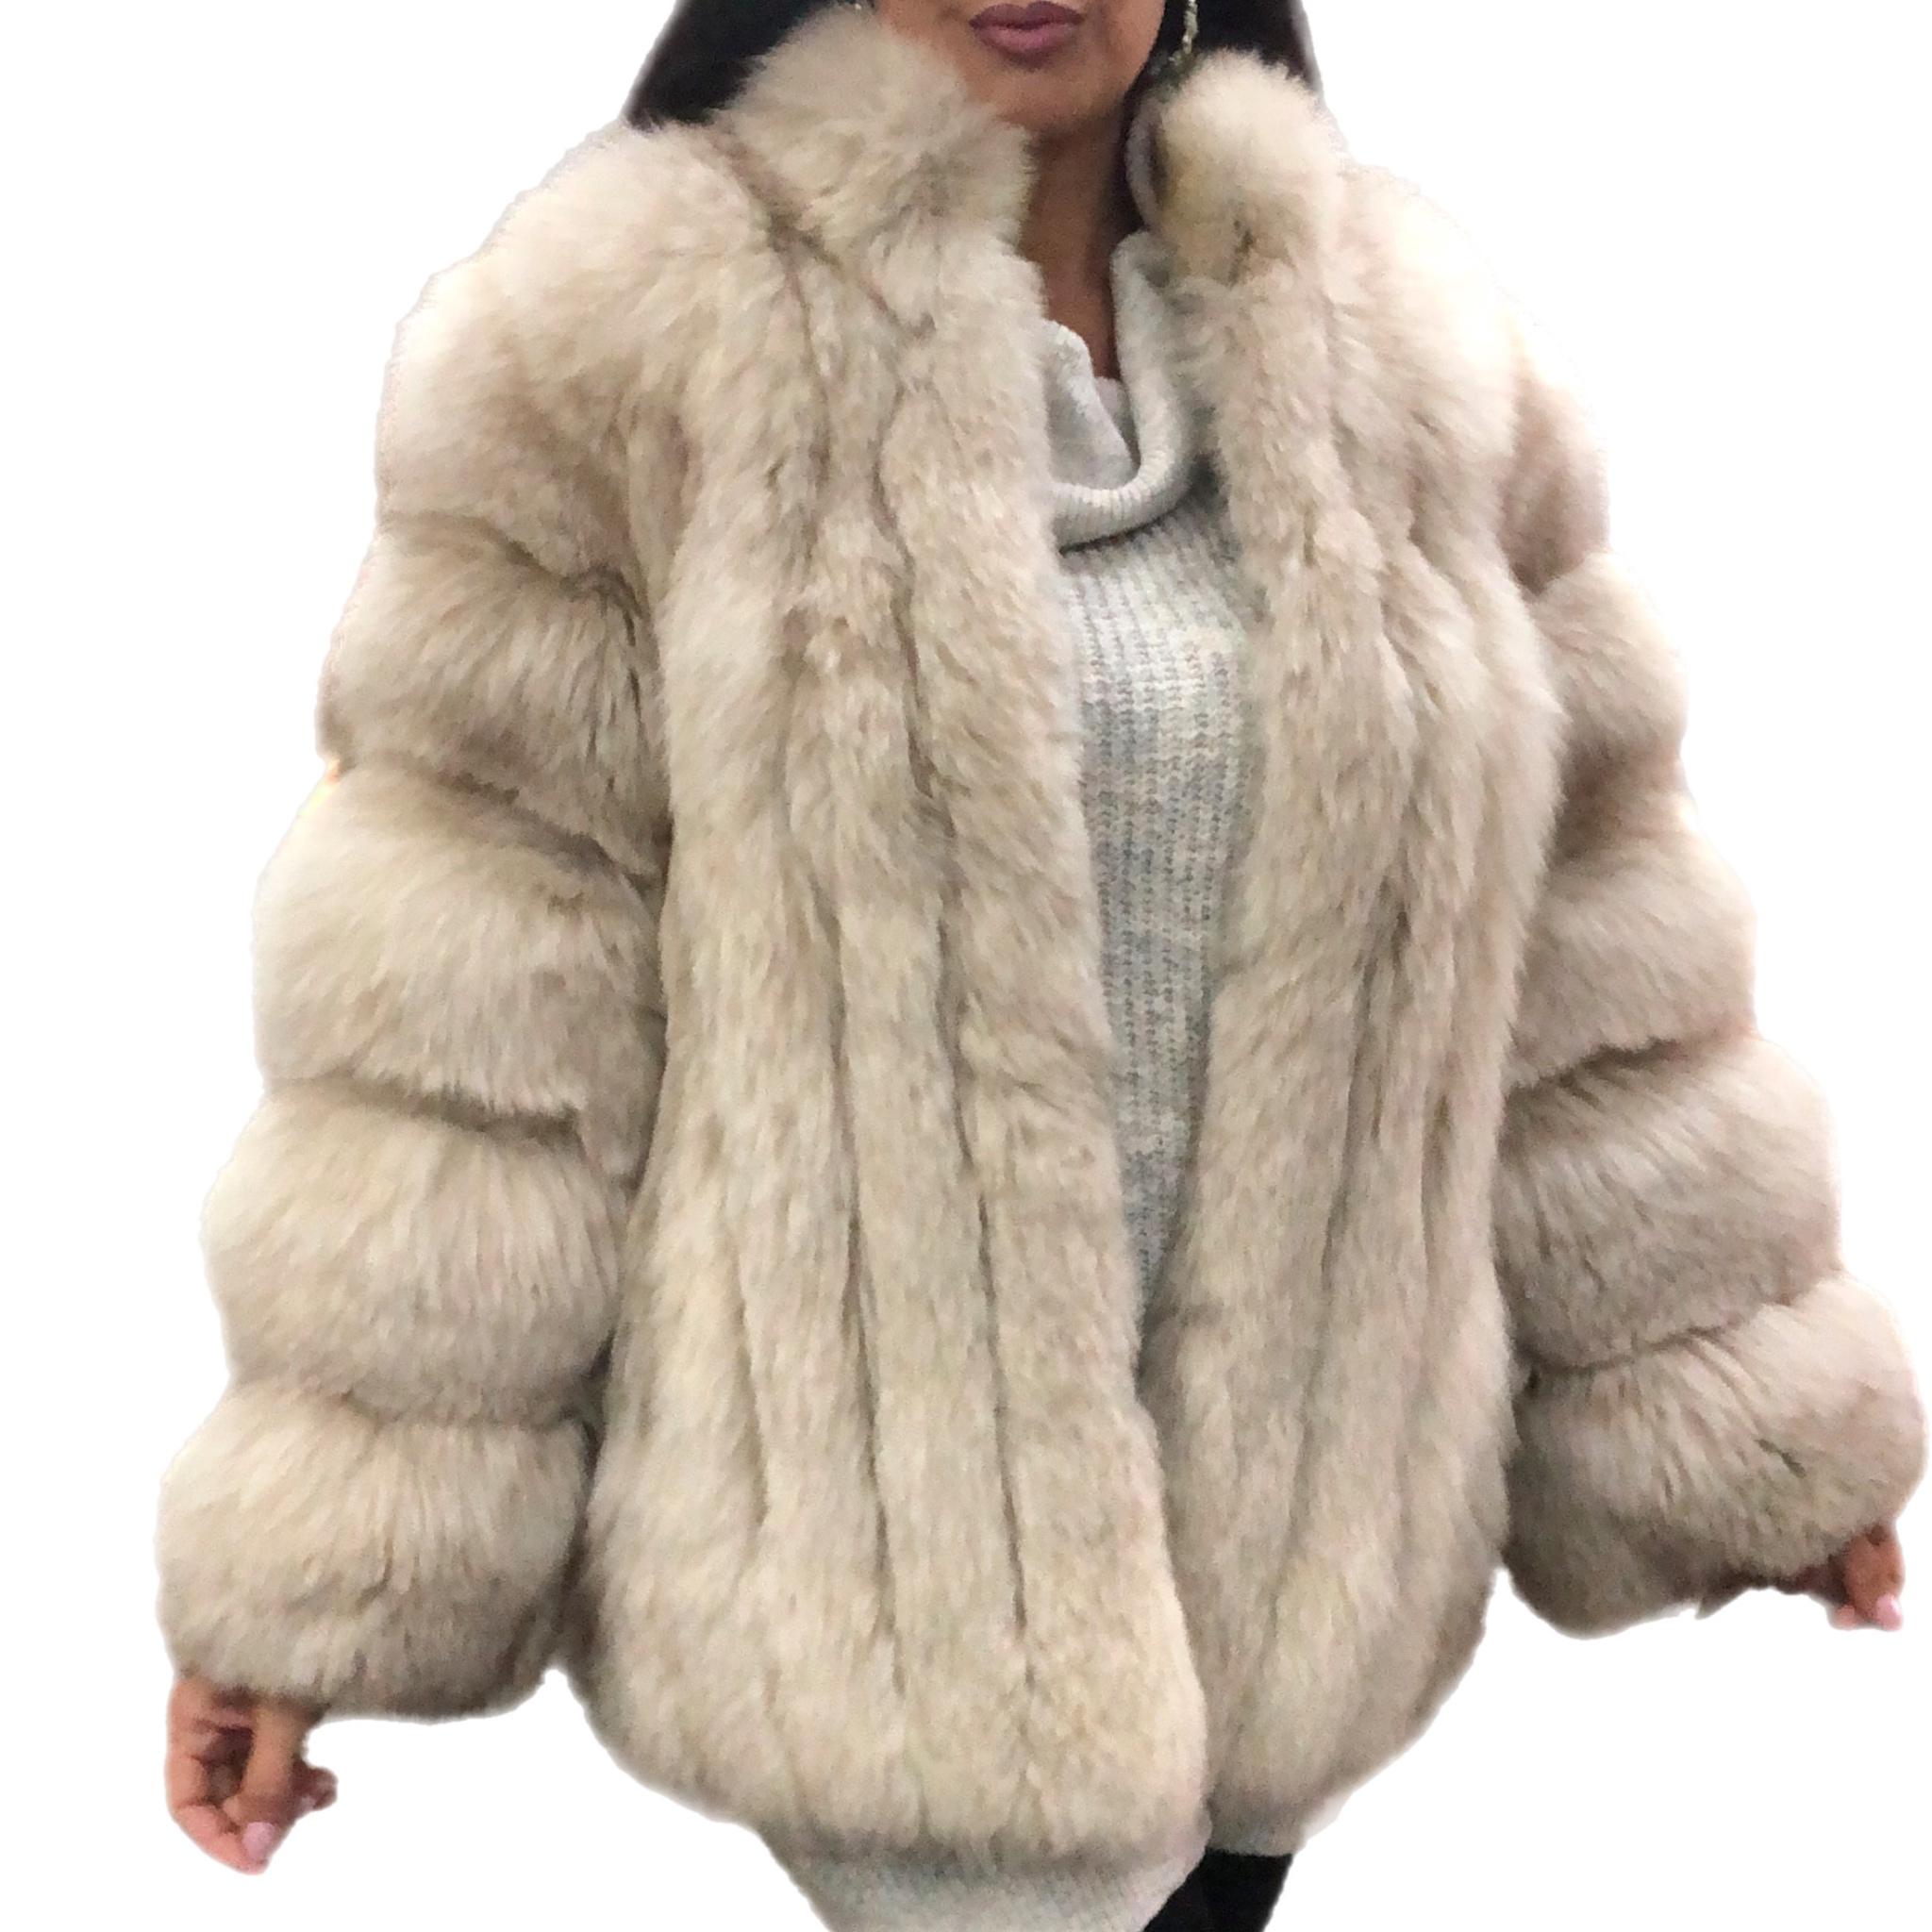 Norwegian Fox Fur coat (Size 8 -S)

Measurements:
-Size 8
-Length 30